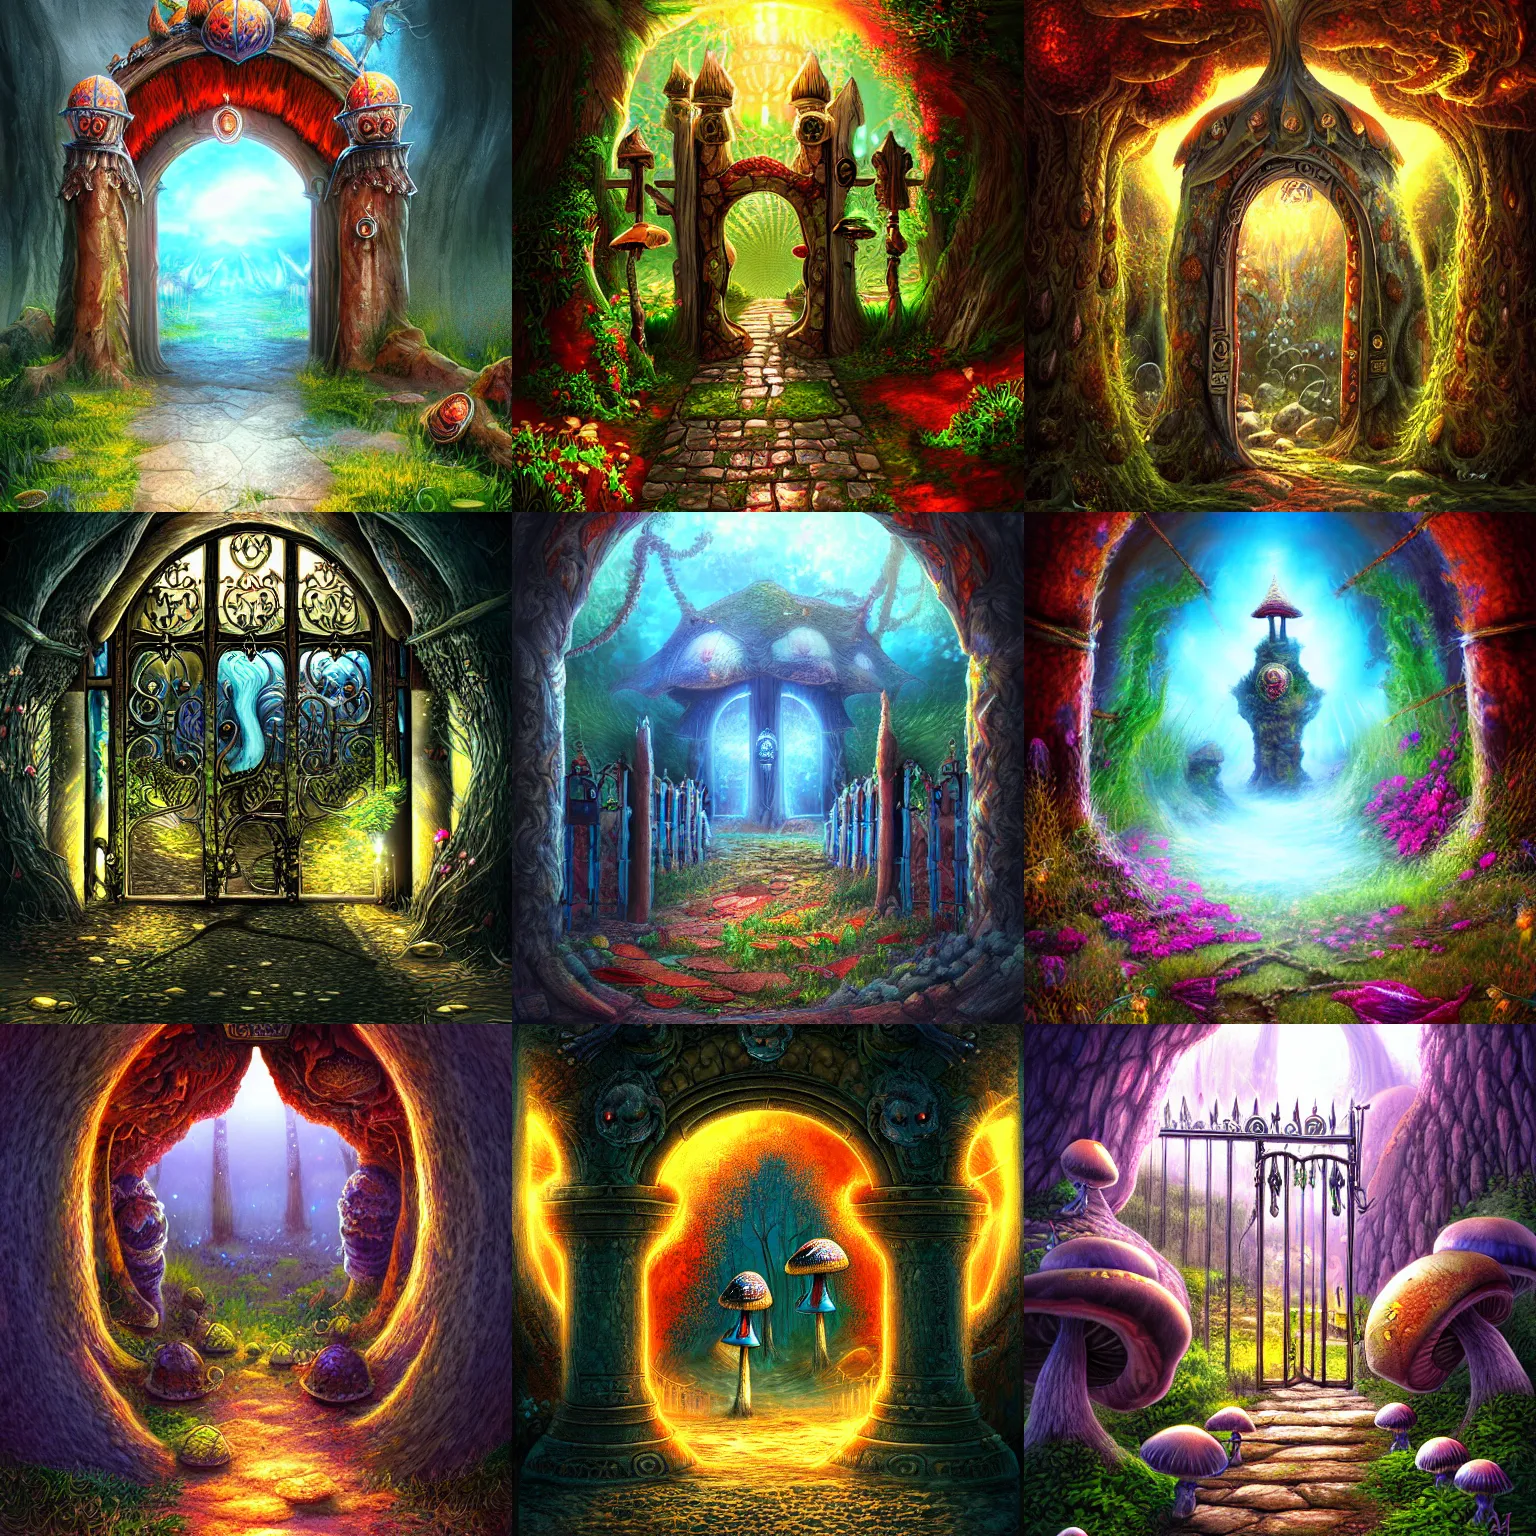 Prompt: The gate to the eternal kingdom of mushrooms, fantasy, digital art, HD, detailed.